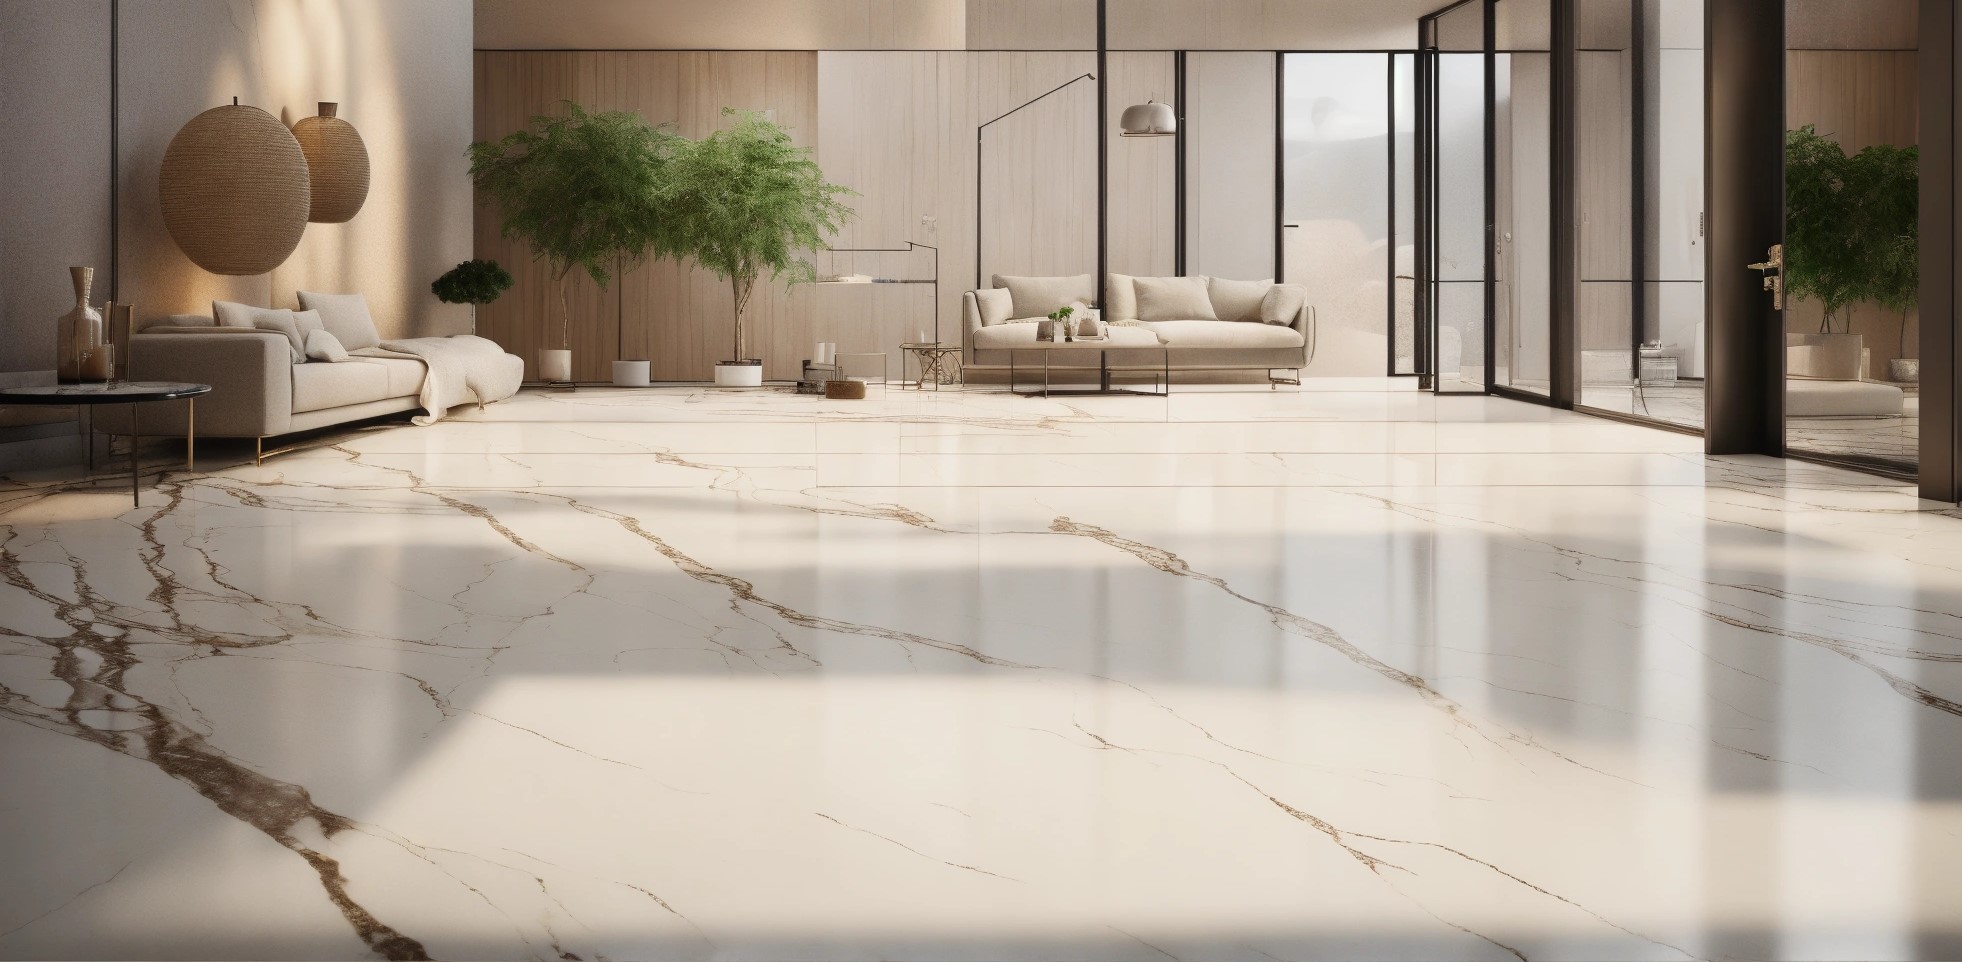 imagen-living-piso-marmol